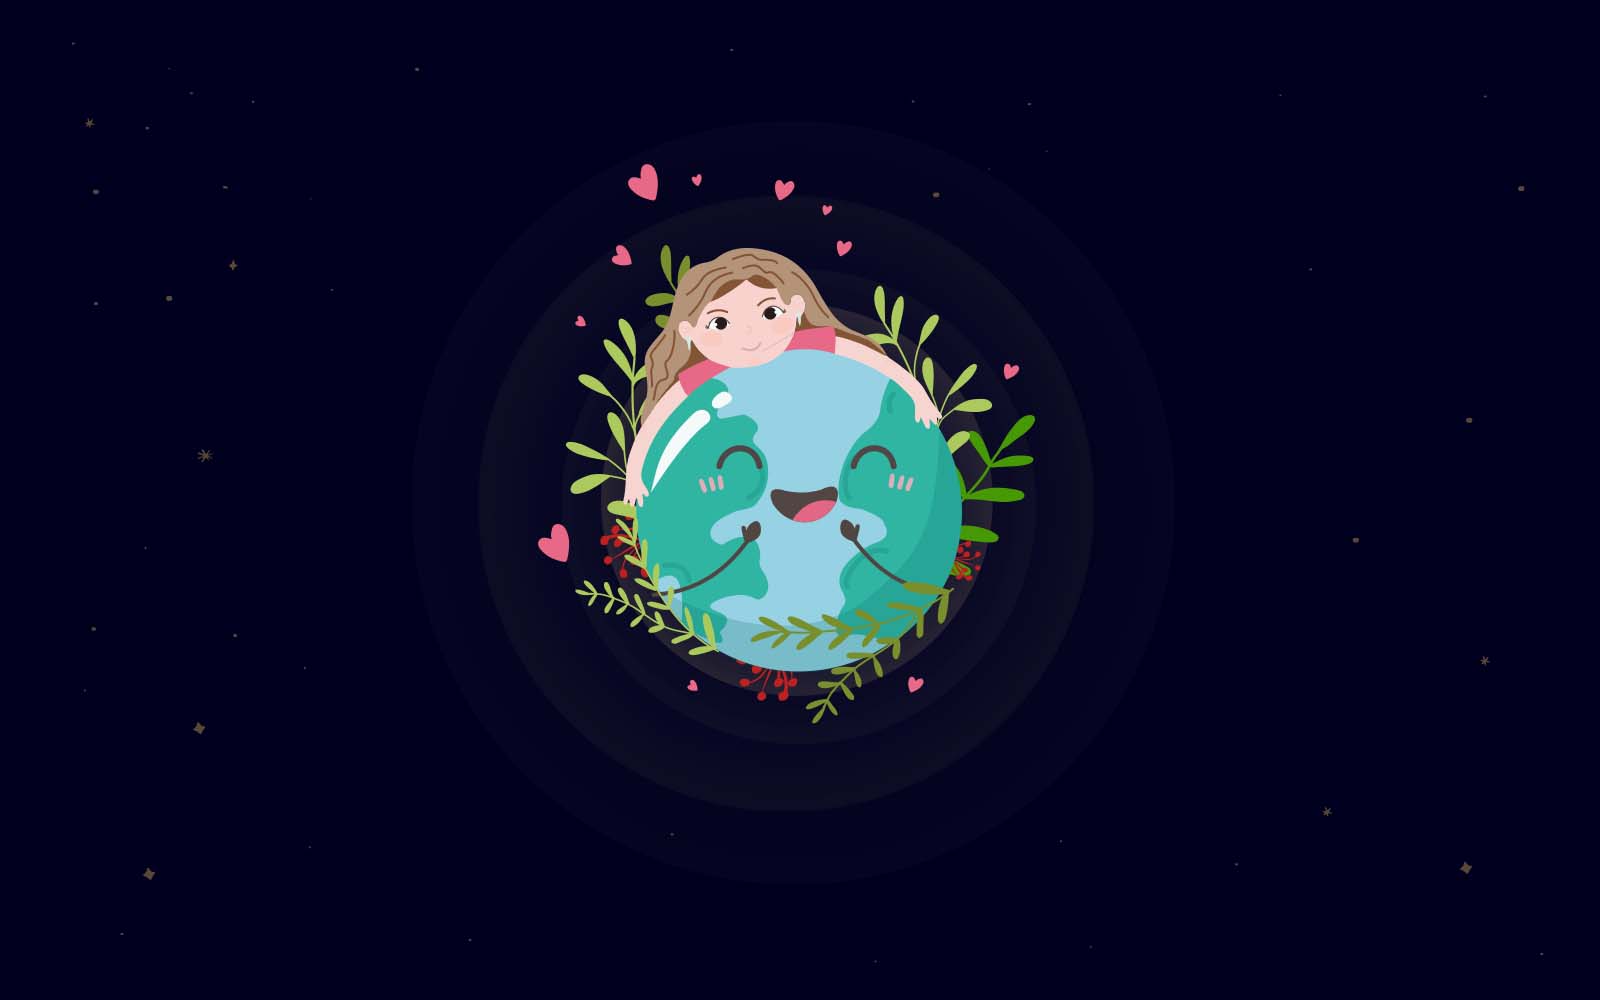 Illustration Of a Little Girl Hugging The Planet